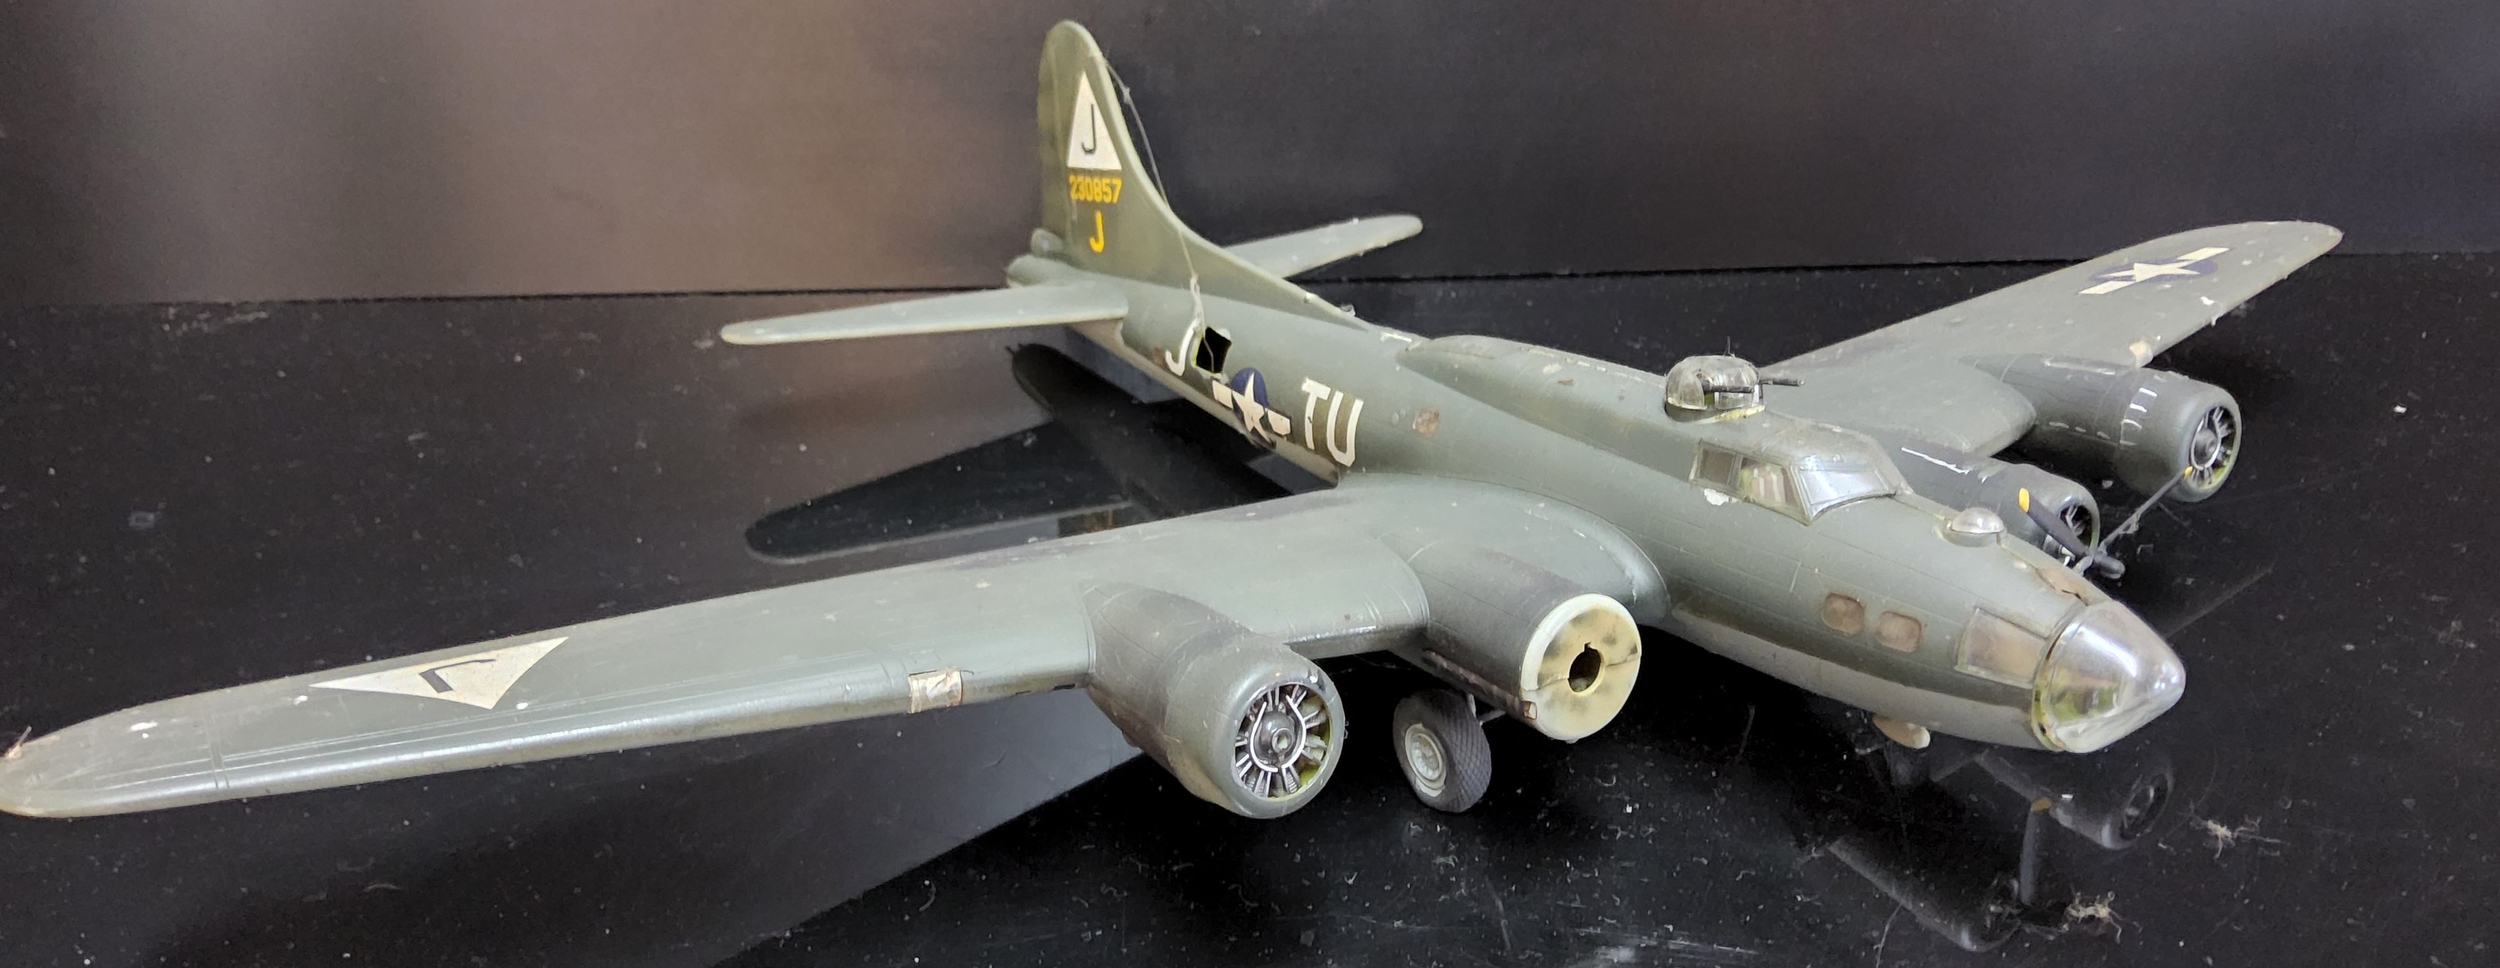 Four Kit Bulit United States Air Force / Navy Aircraft Models, Northrop Grumman E-2 Hawkeye, - Image 3 of 4